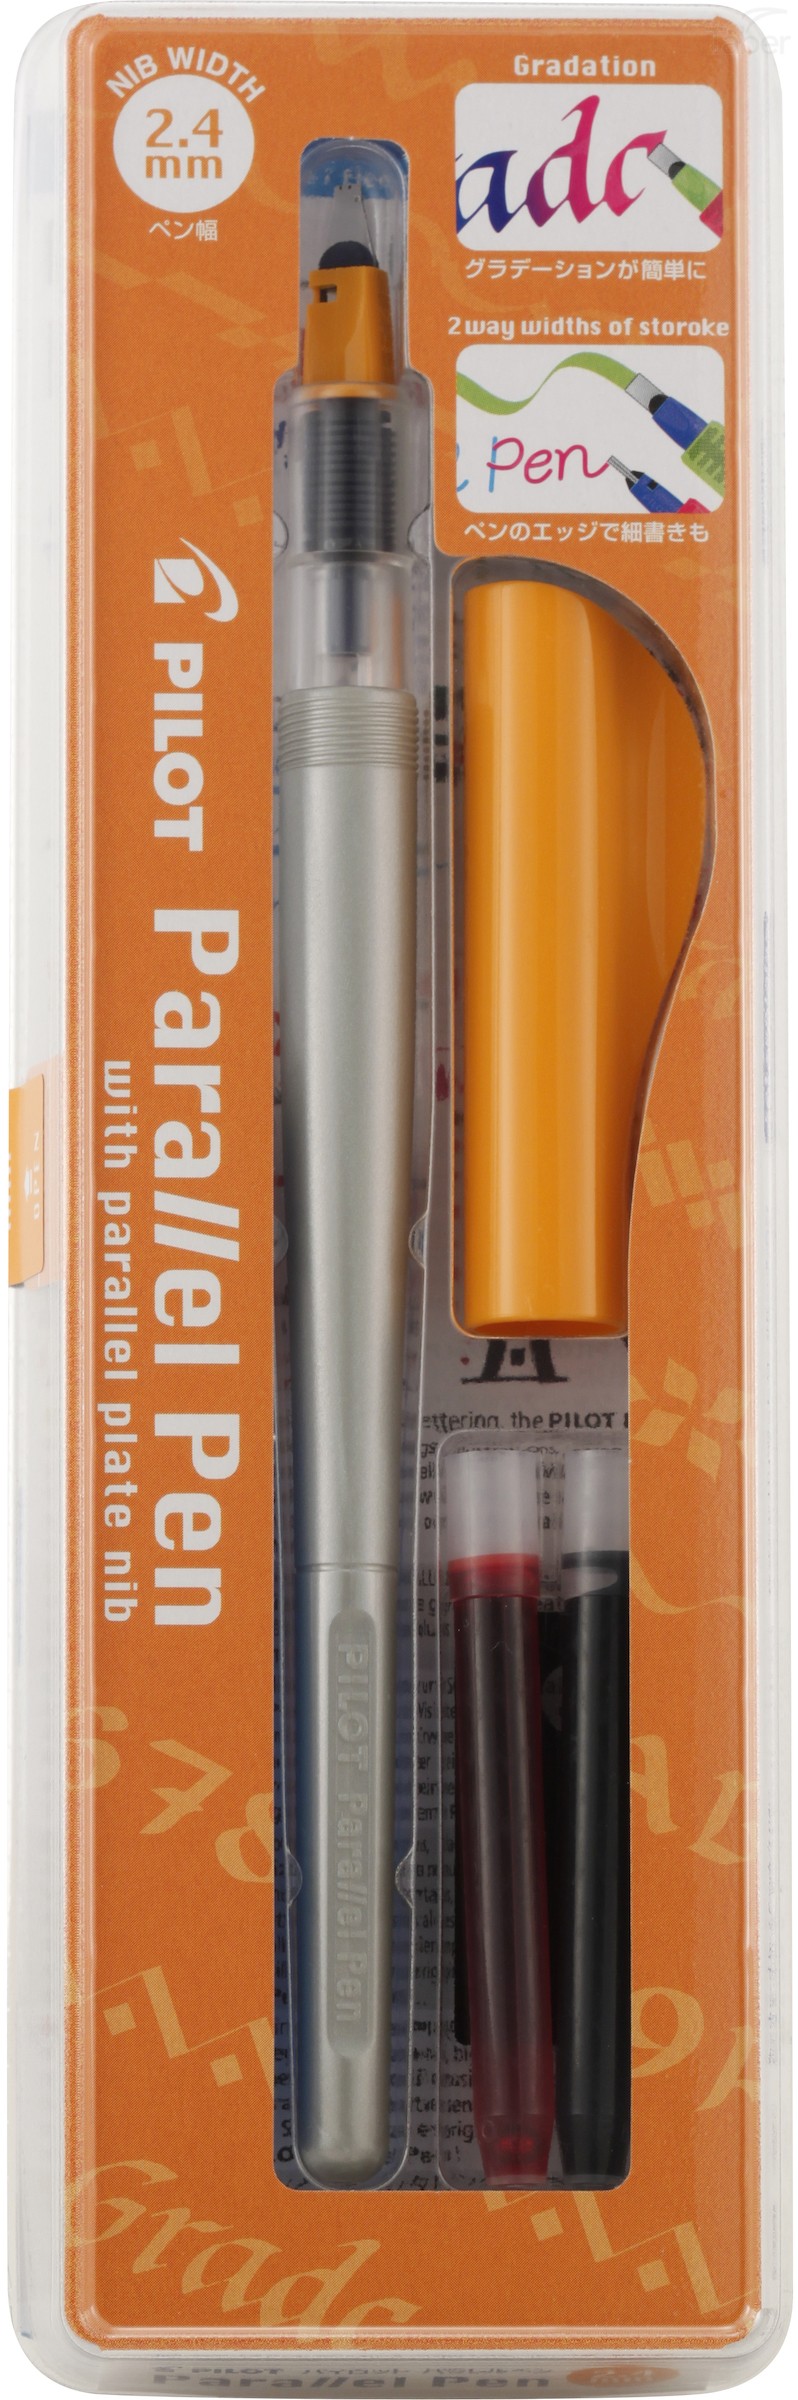 Pilot FP324-SET Parallel Pen Set, 2.4mm nib